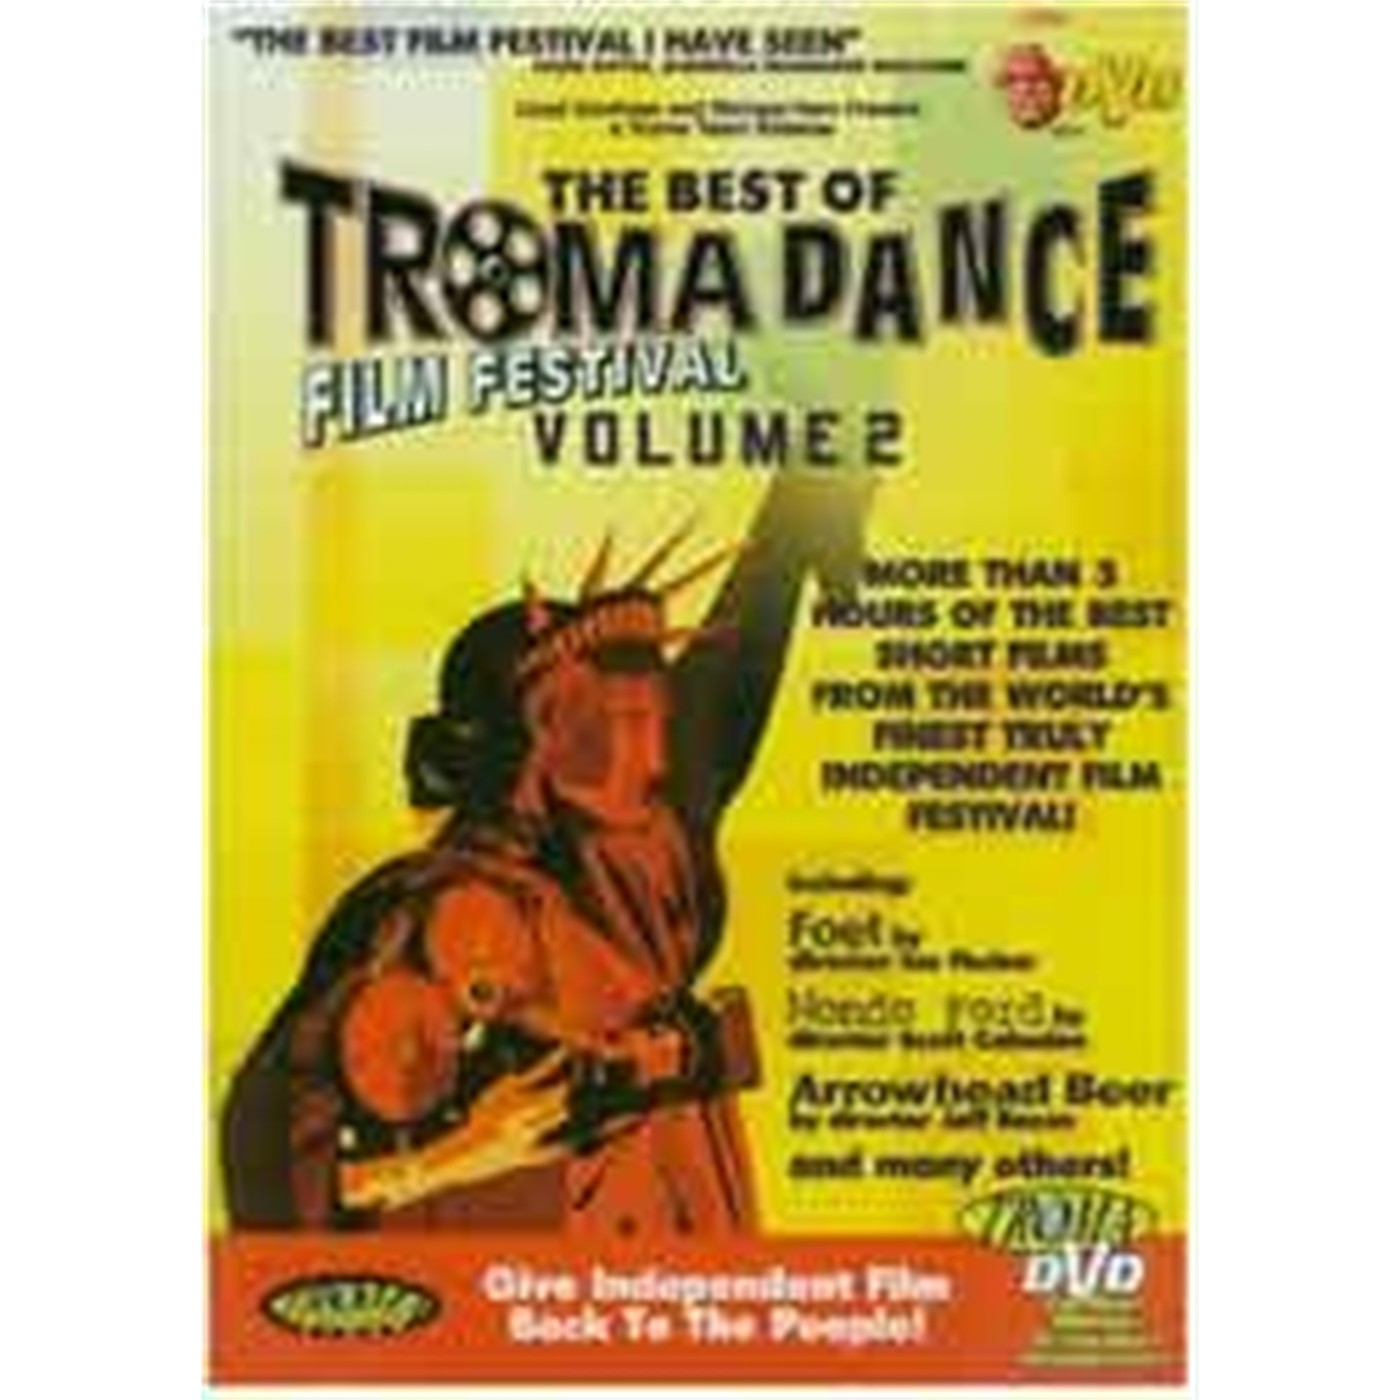 Best of Tromadance Vol. 2